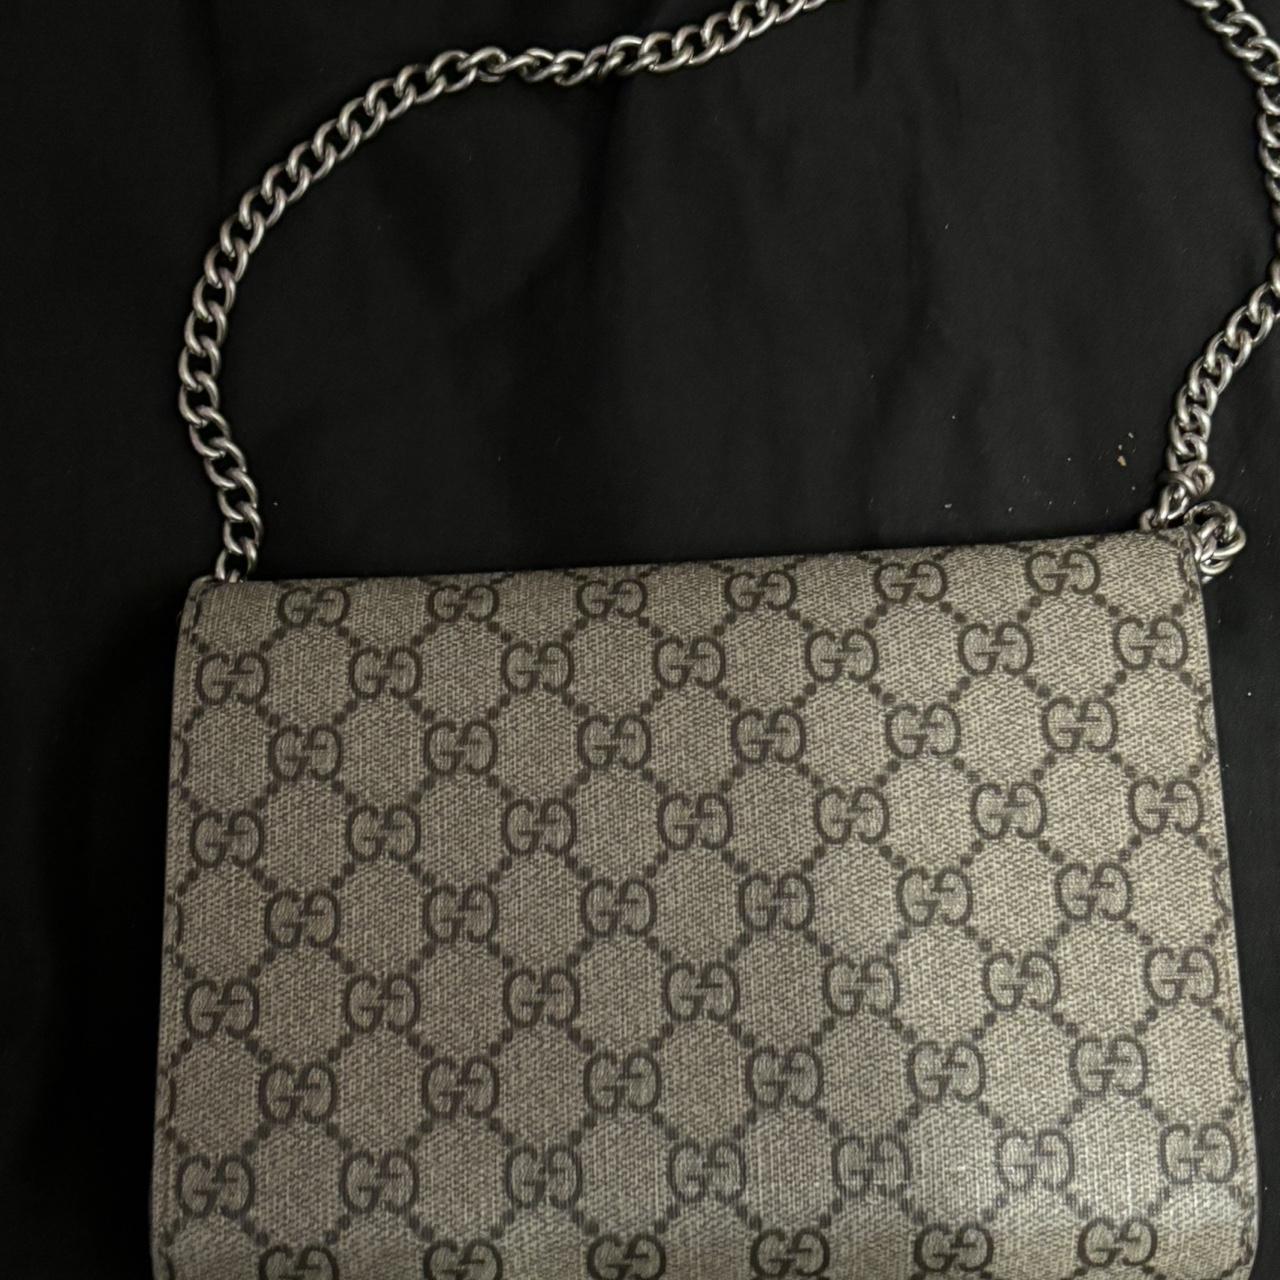 New Authentic Gucci Metallic Leather Glitter Bow Wristlet Clutch Purse $780  | eBay